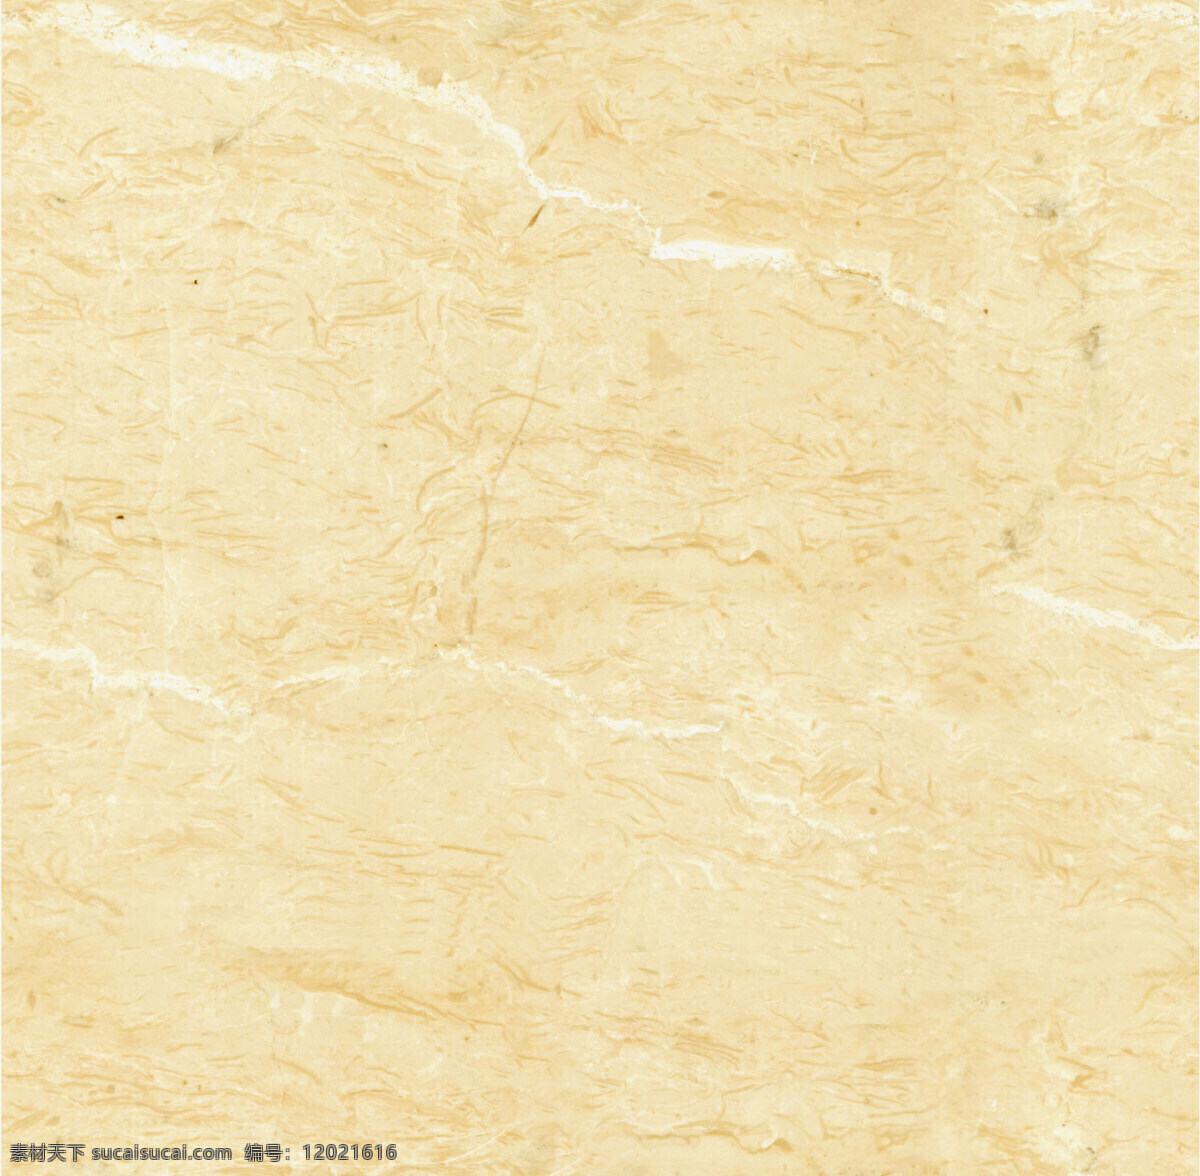 vray 大理石 材质 max9 光滑 米黄色 有贴图 石料 玻化砖 3d模型素材 材质贴图